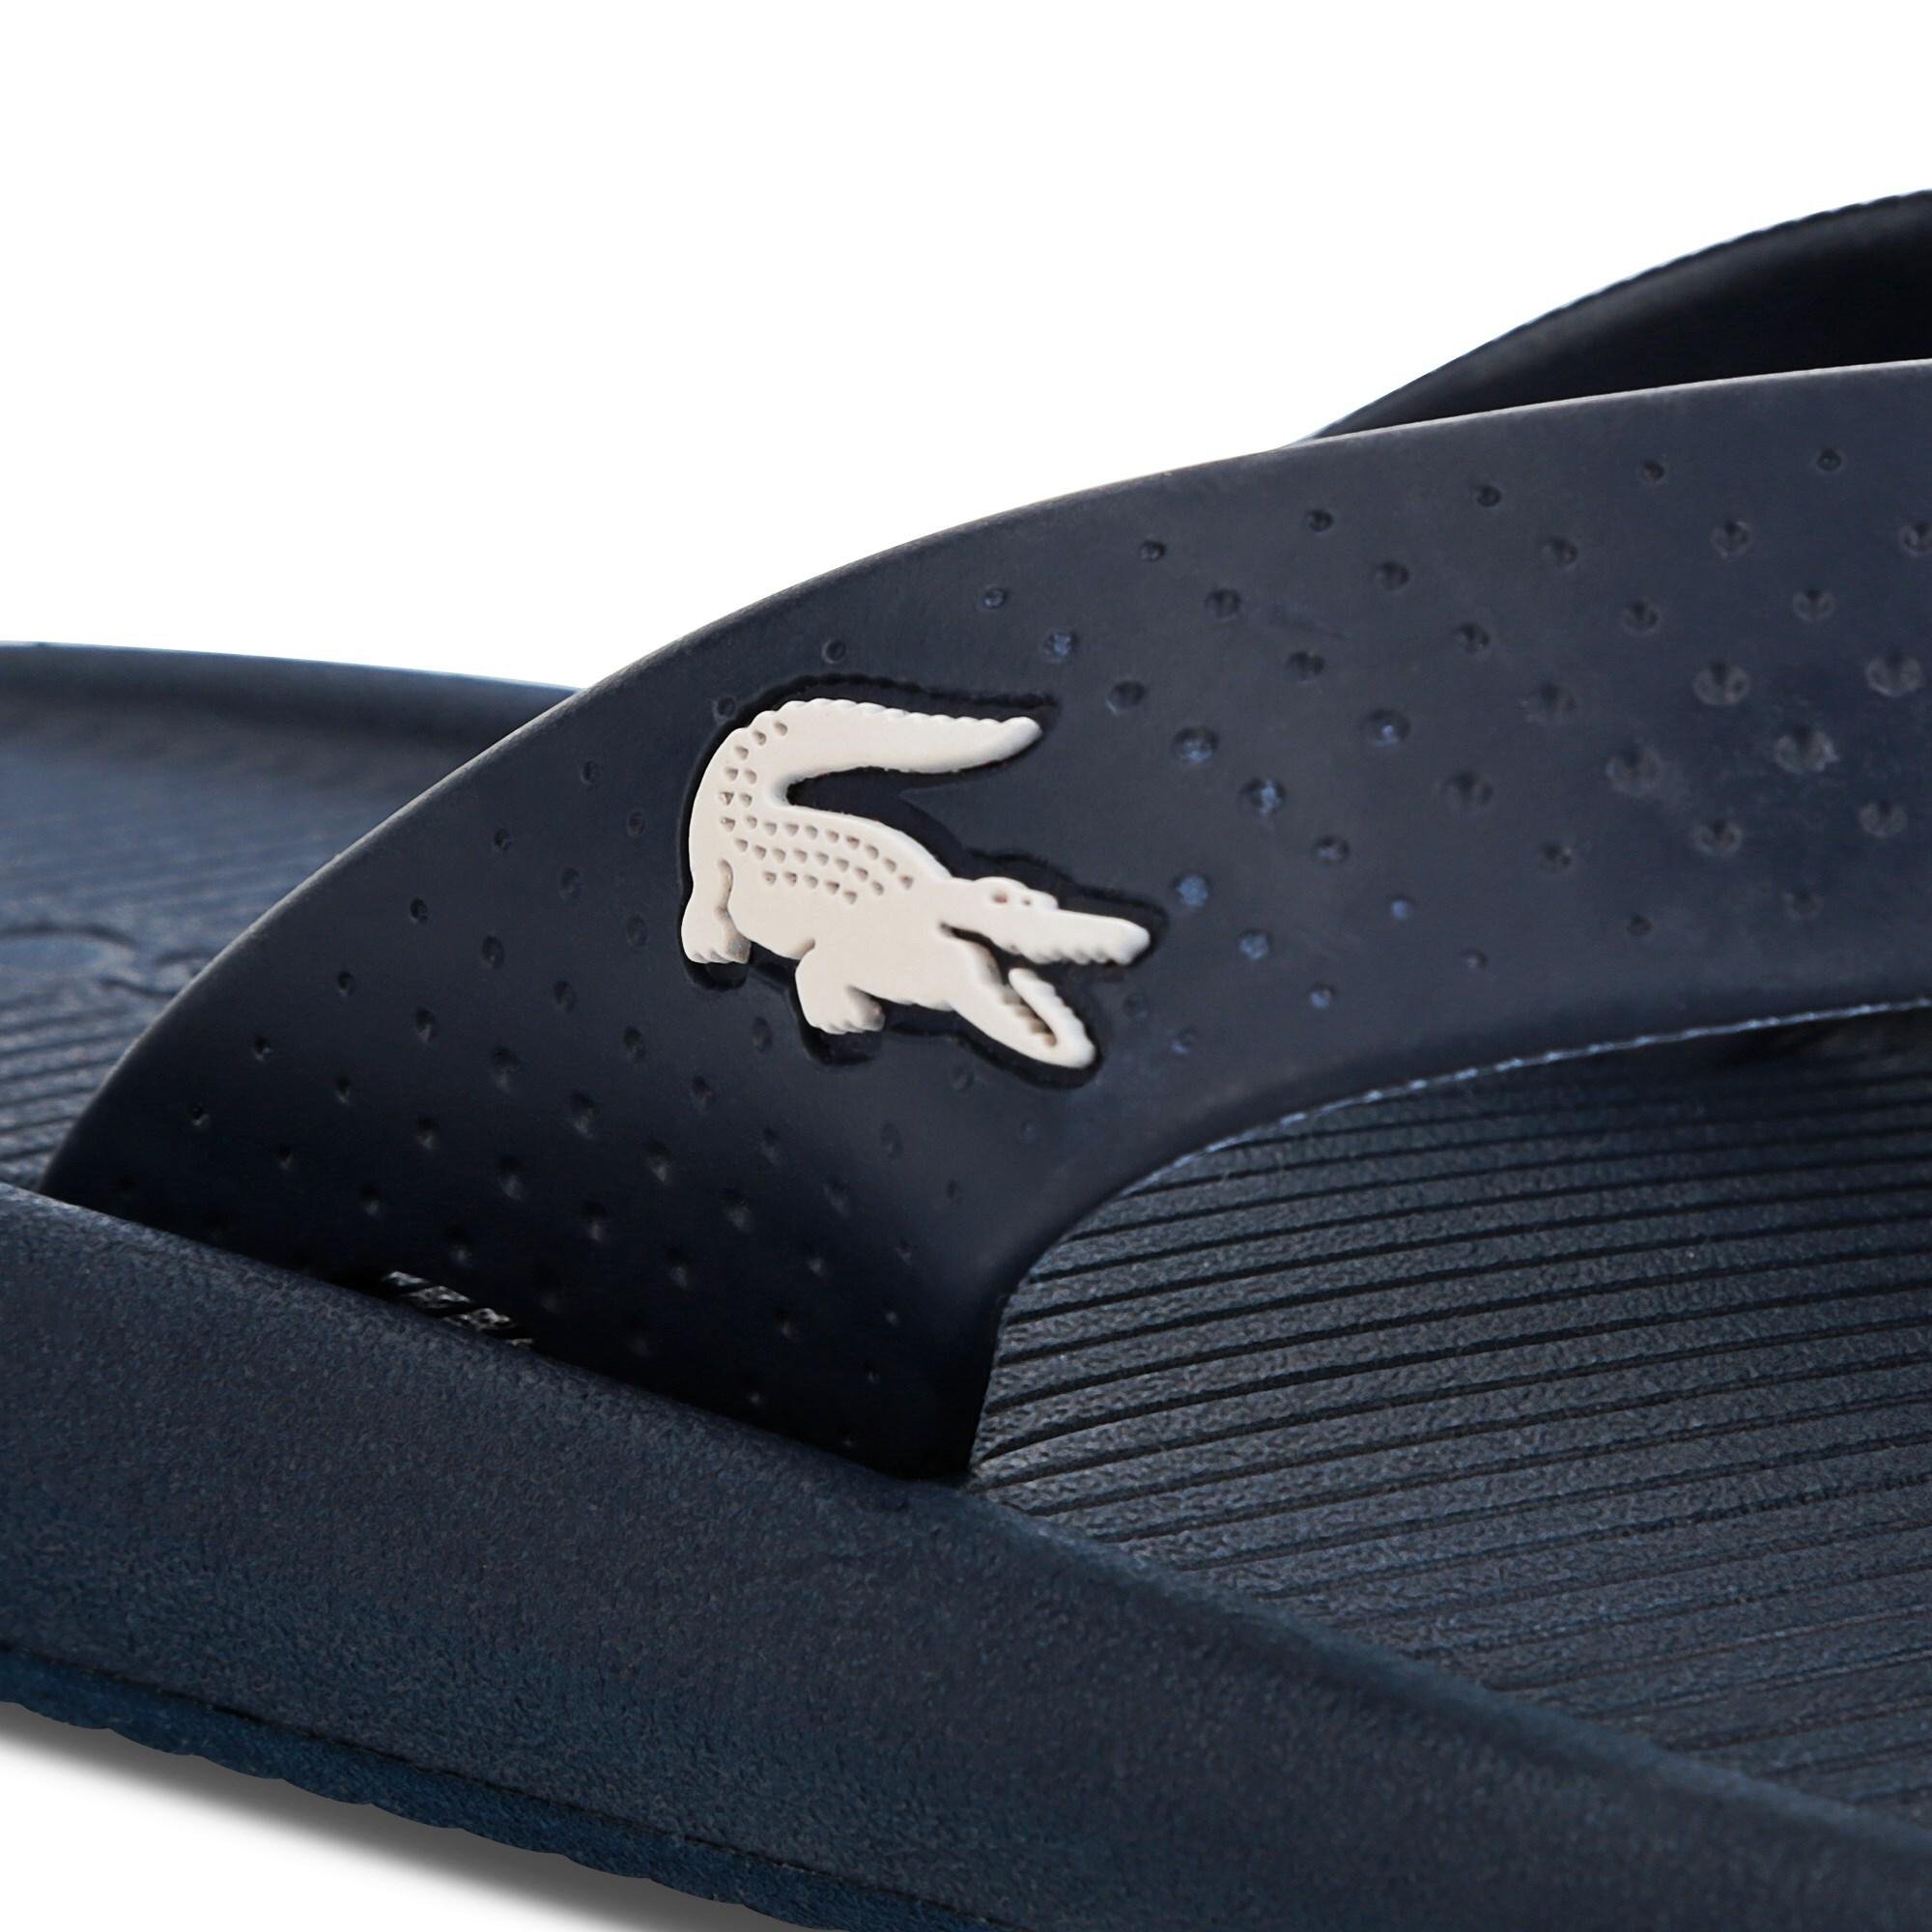 Lacoste Men's Croco Sandal 219 1 Cma Slippers